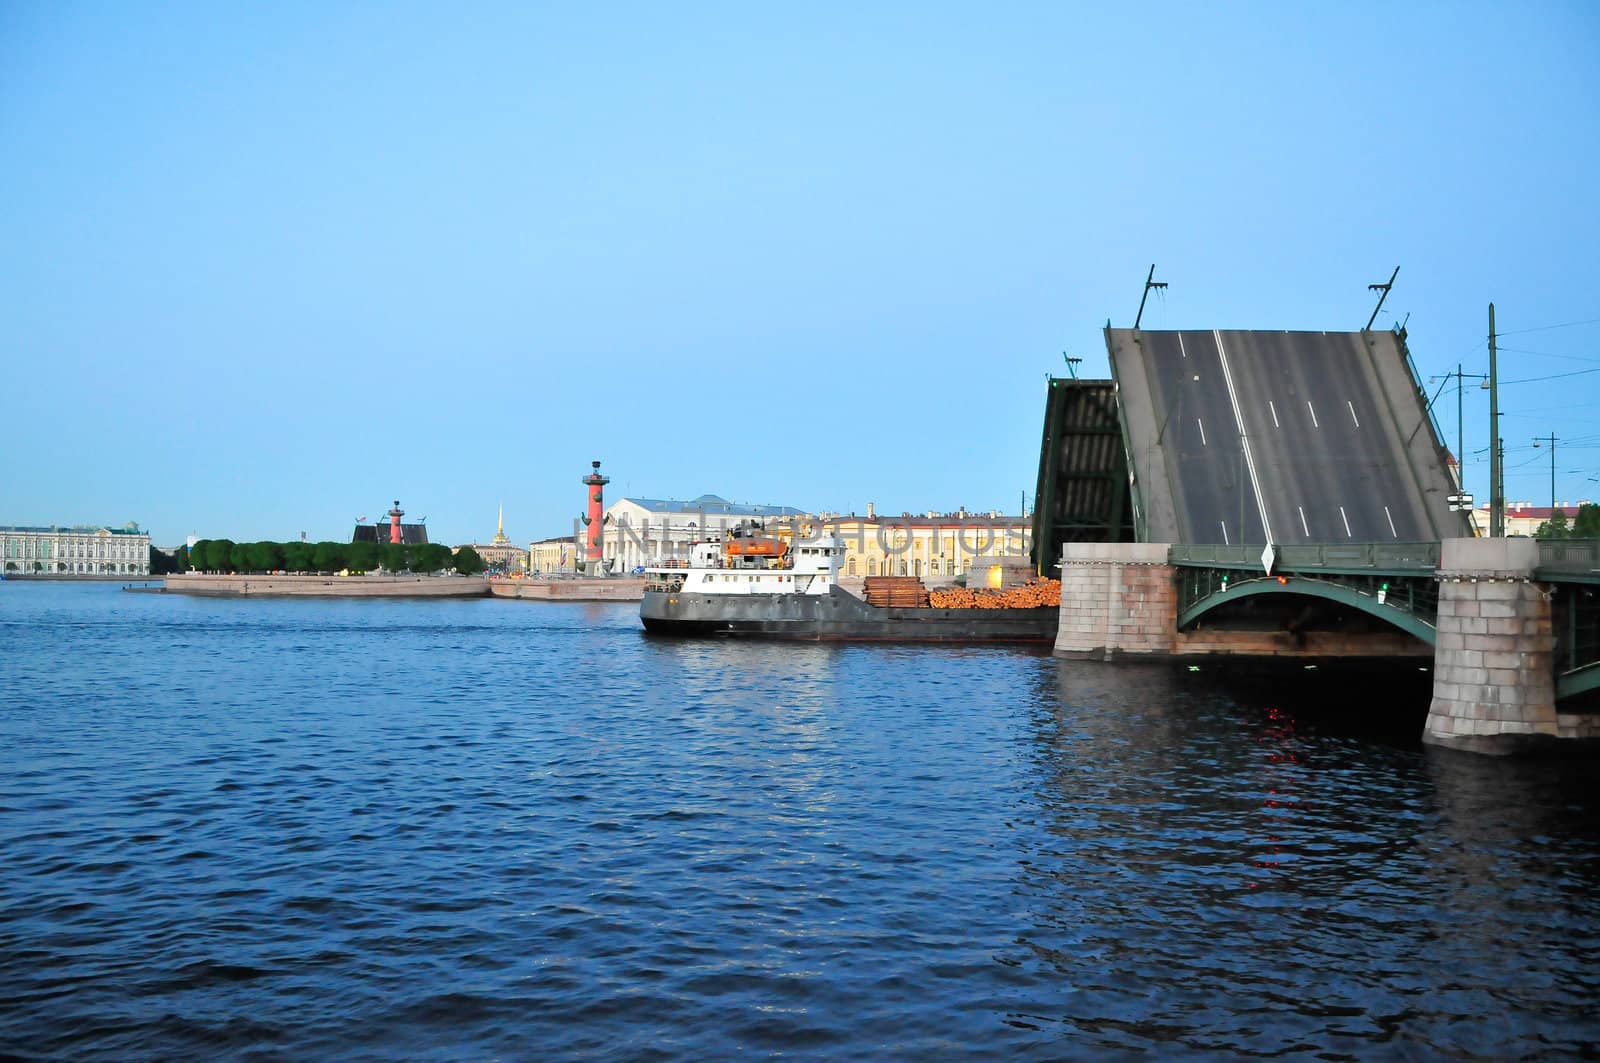 View of Saint Petersburg, Russia